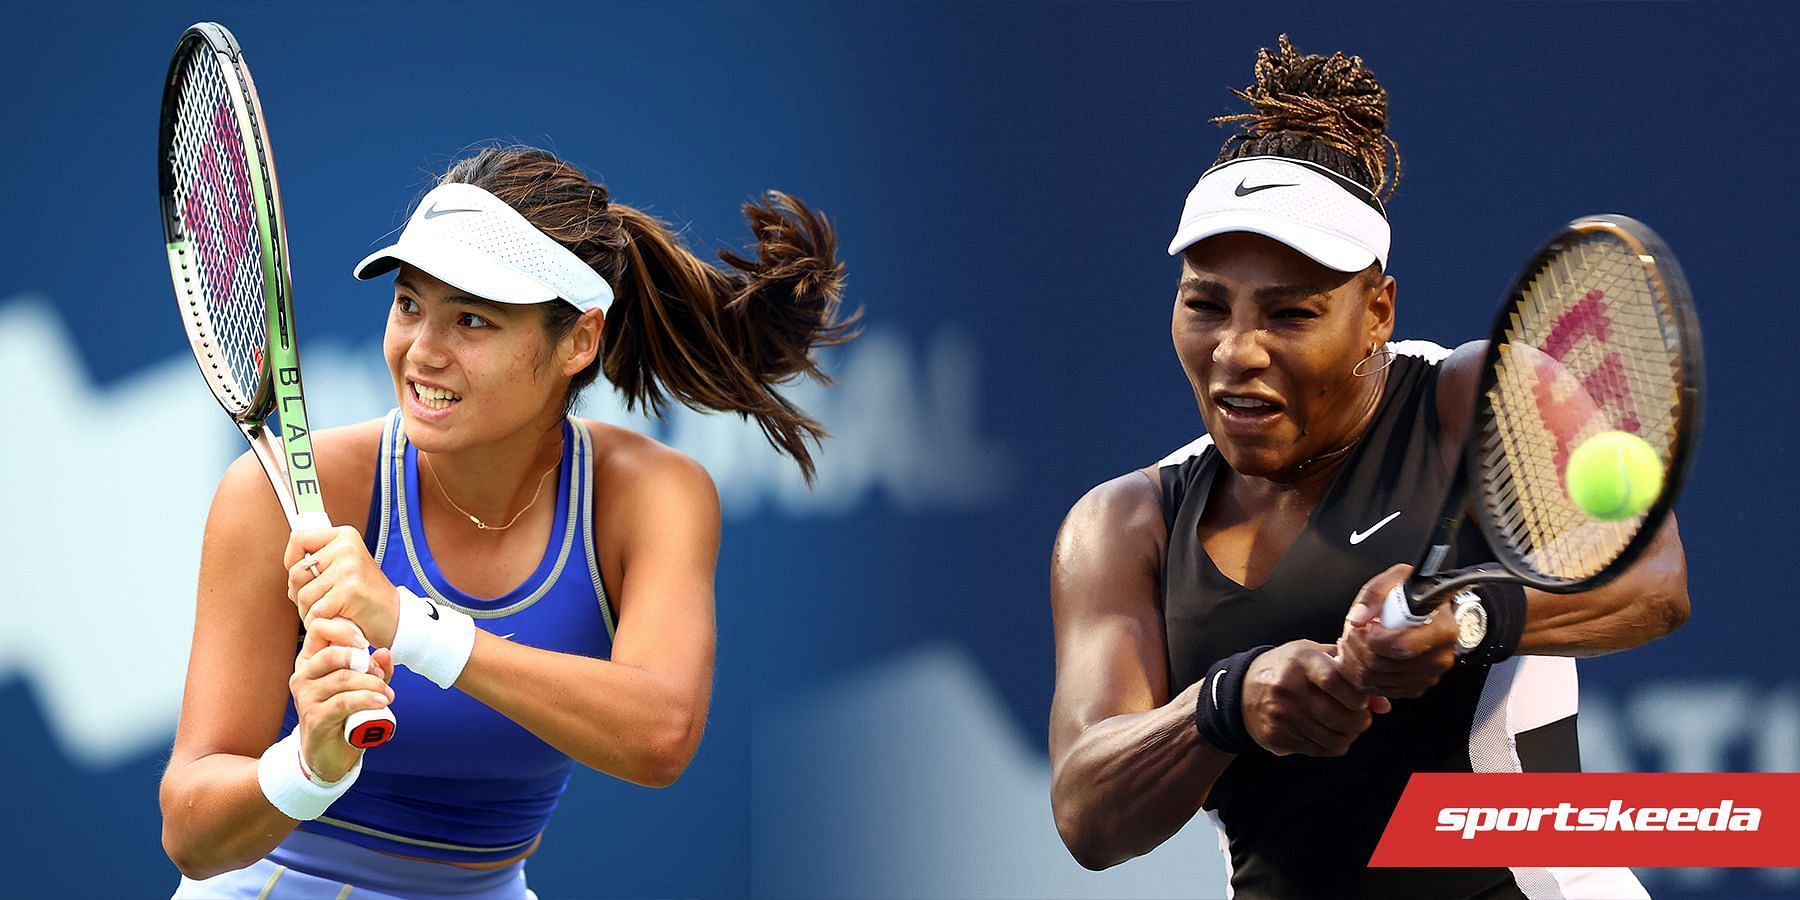 Emma Raducanu will face Serena Williams in the first round of the Cincinnati Masters